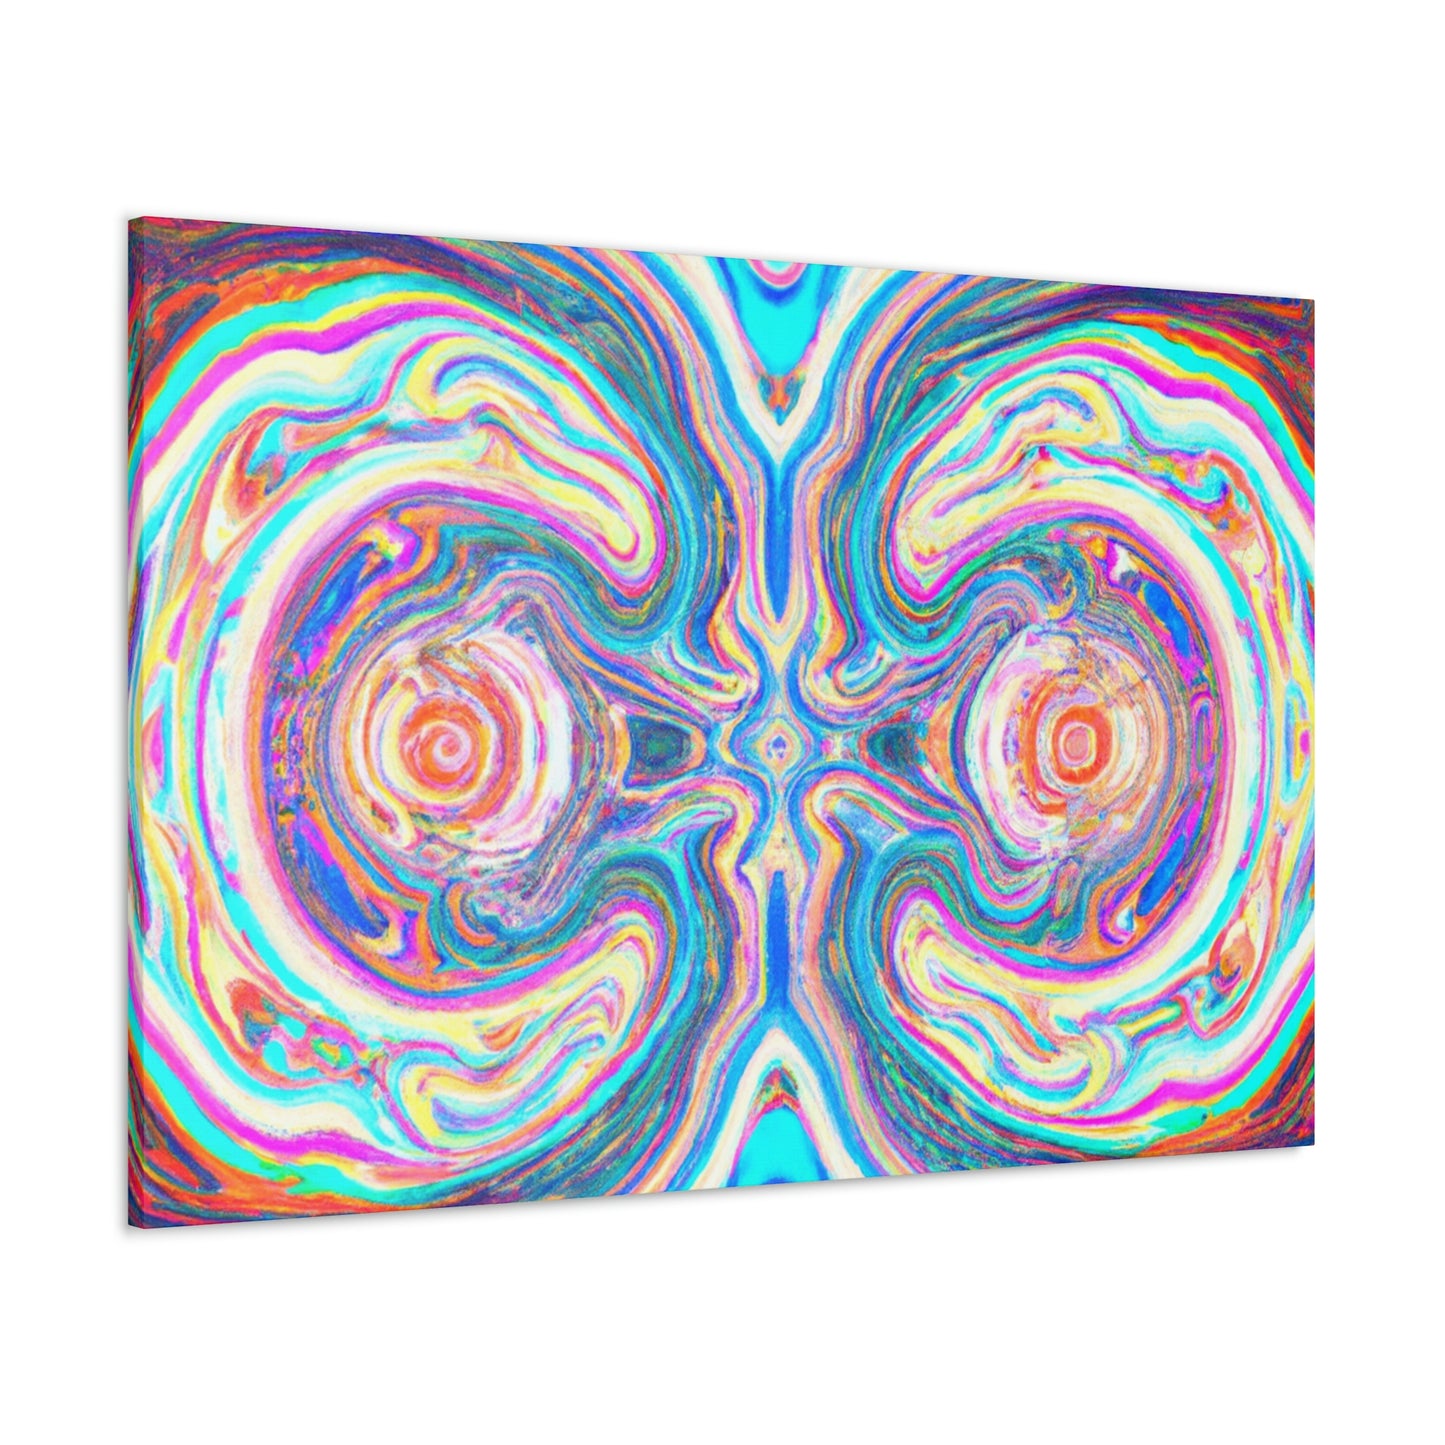 Waltero Figglesworth - psychedelic Canvas